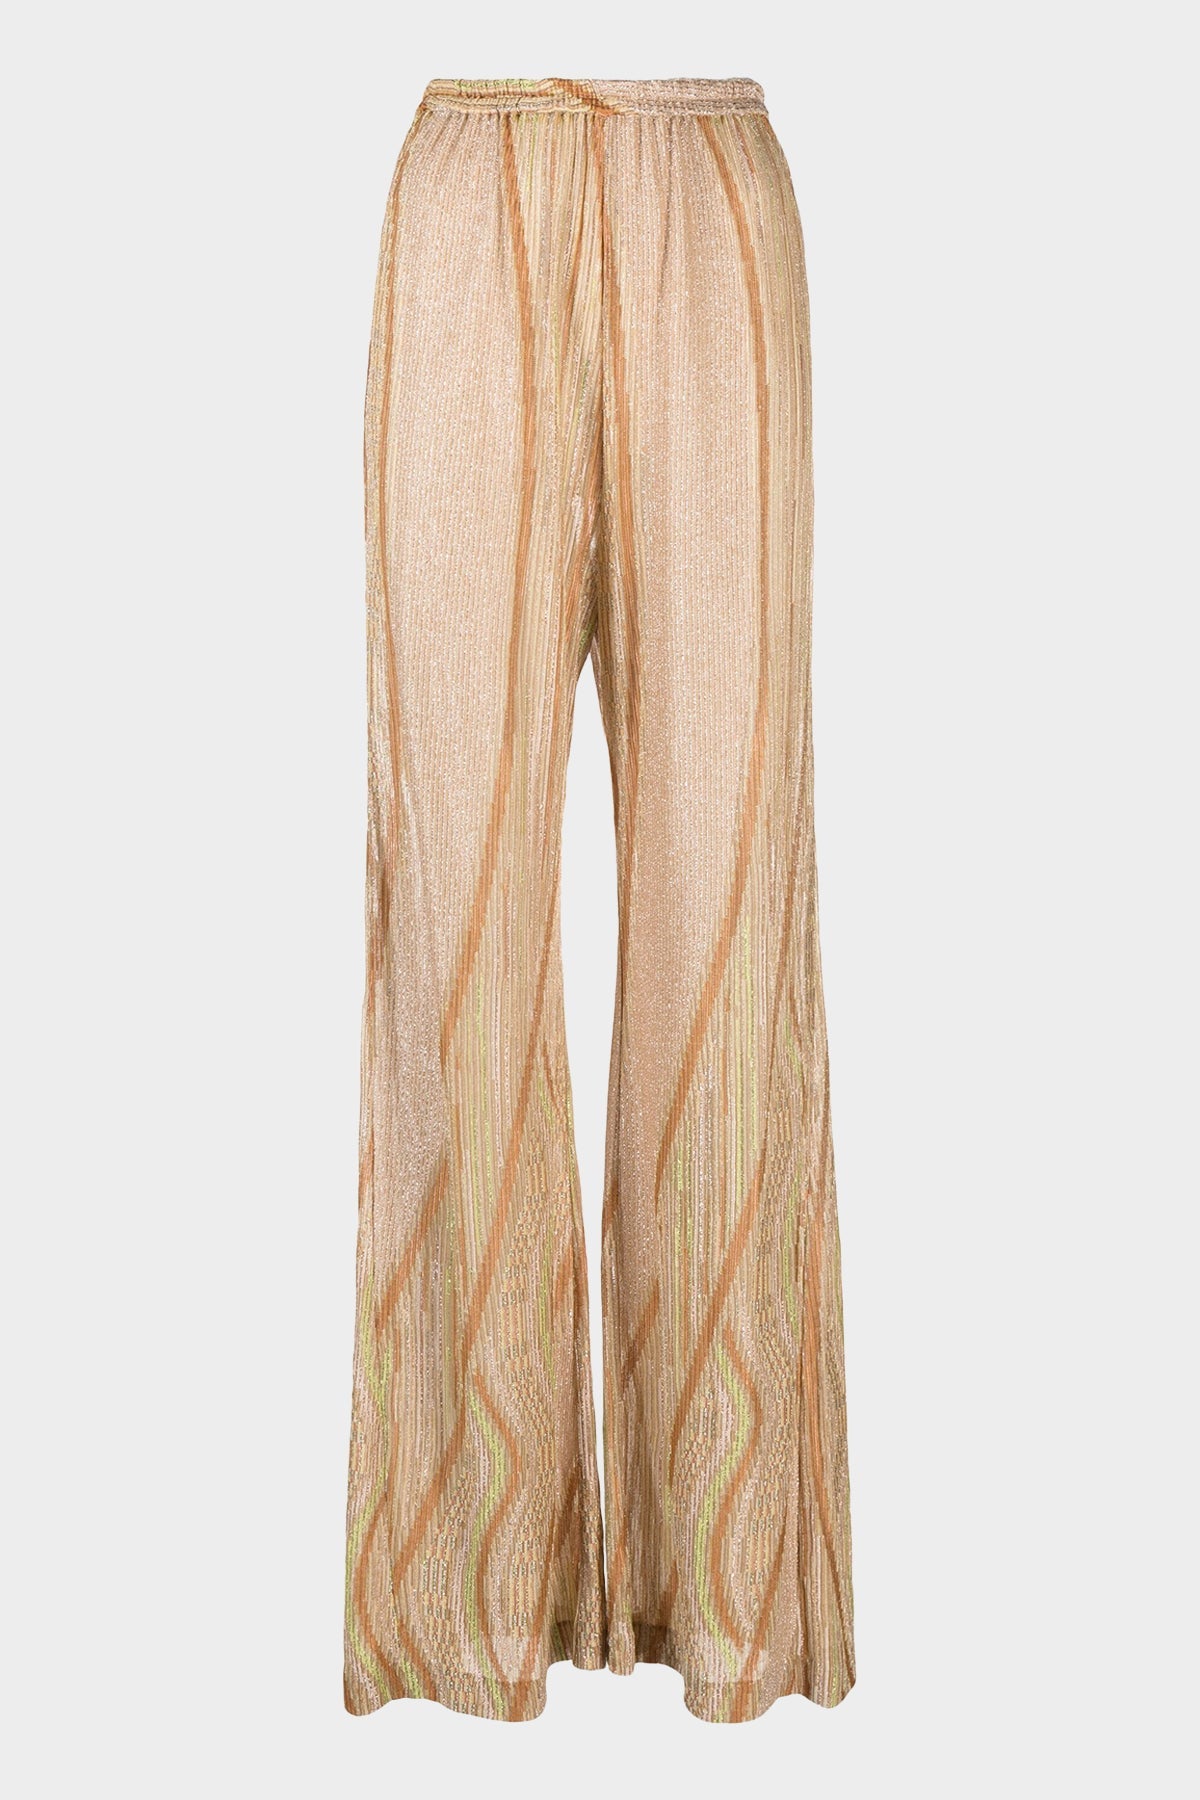 Lurex Jacquard Jersey Flared Pants in Daffodilp - shop-olivia.com